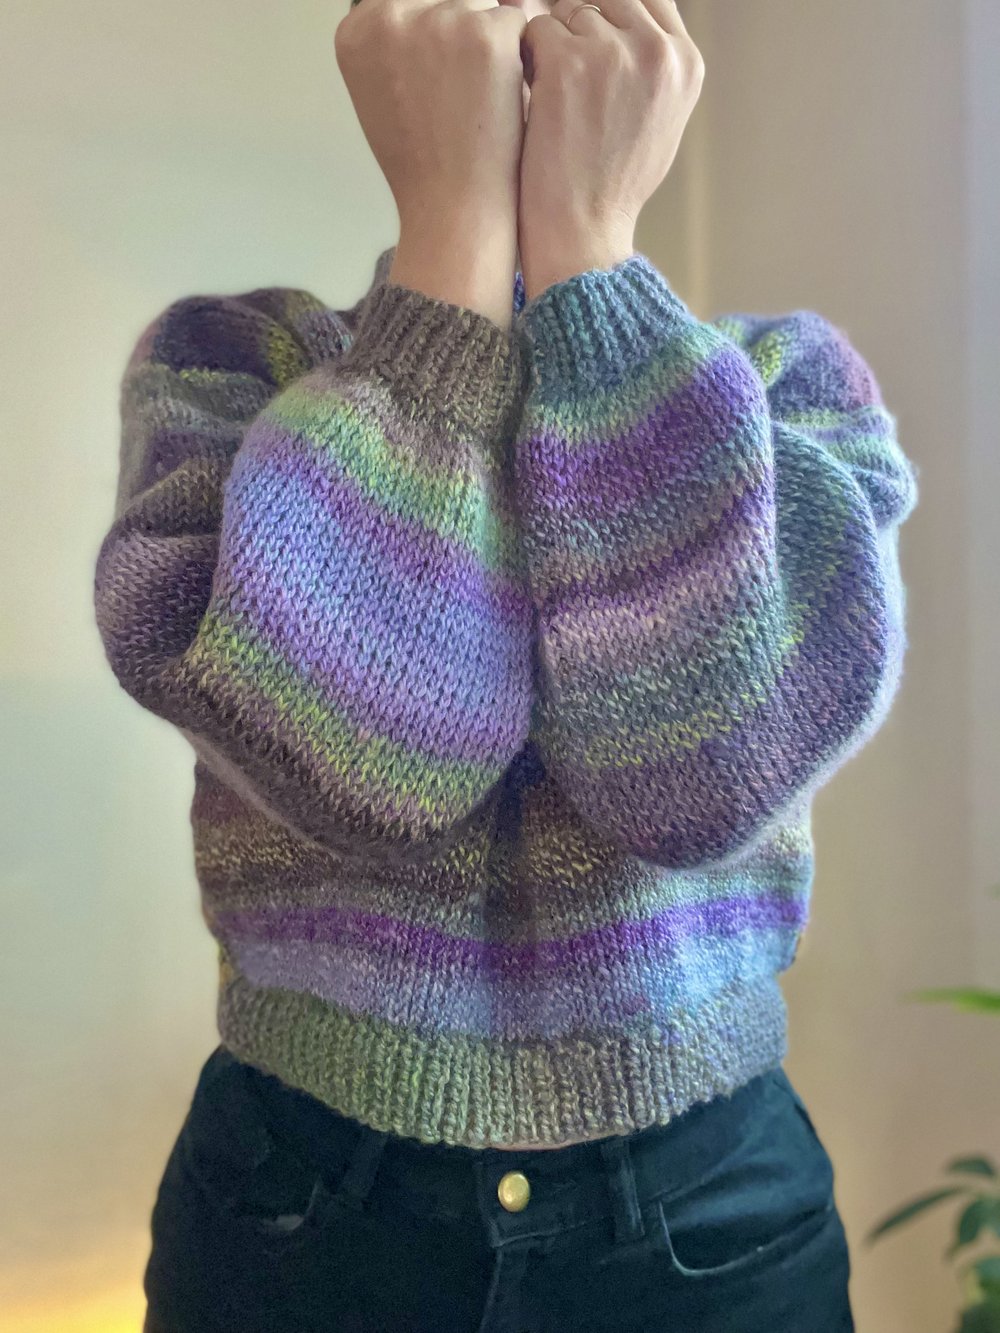 Not Knit Sweater: Tunisian Crochet Sweater Pattern — Just The